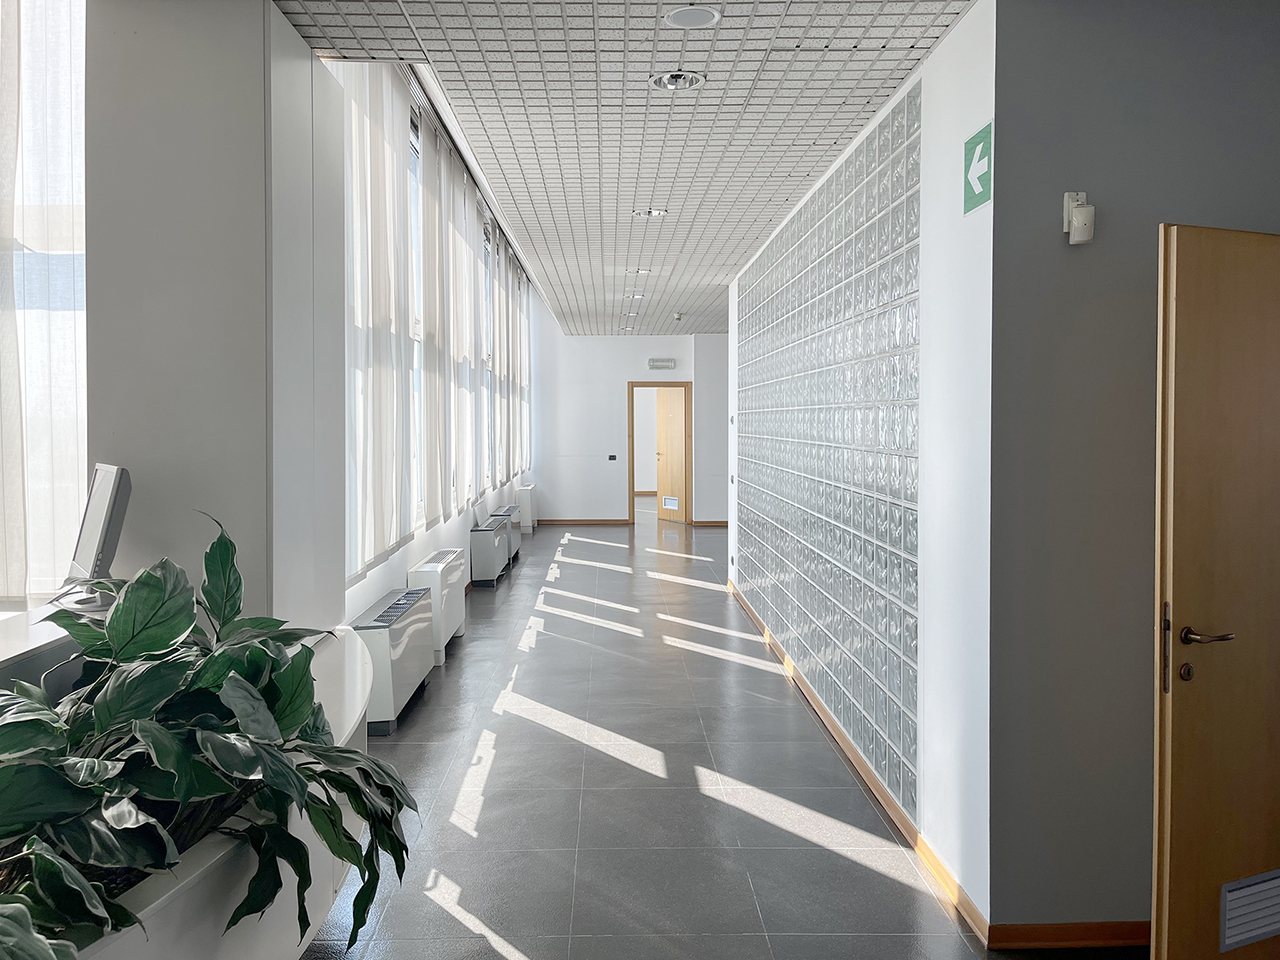 office 377 sq m (4058 sq ft) in Atlantic Business Center - fourth floor - hallway